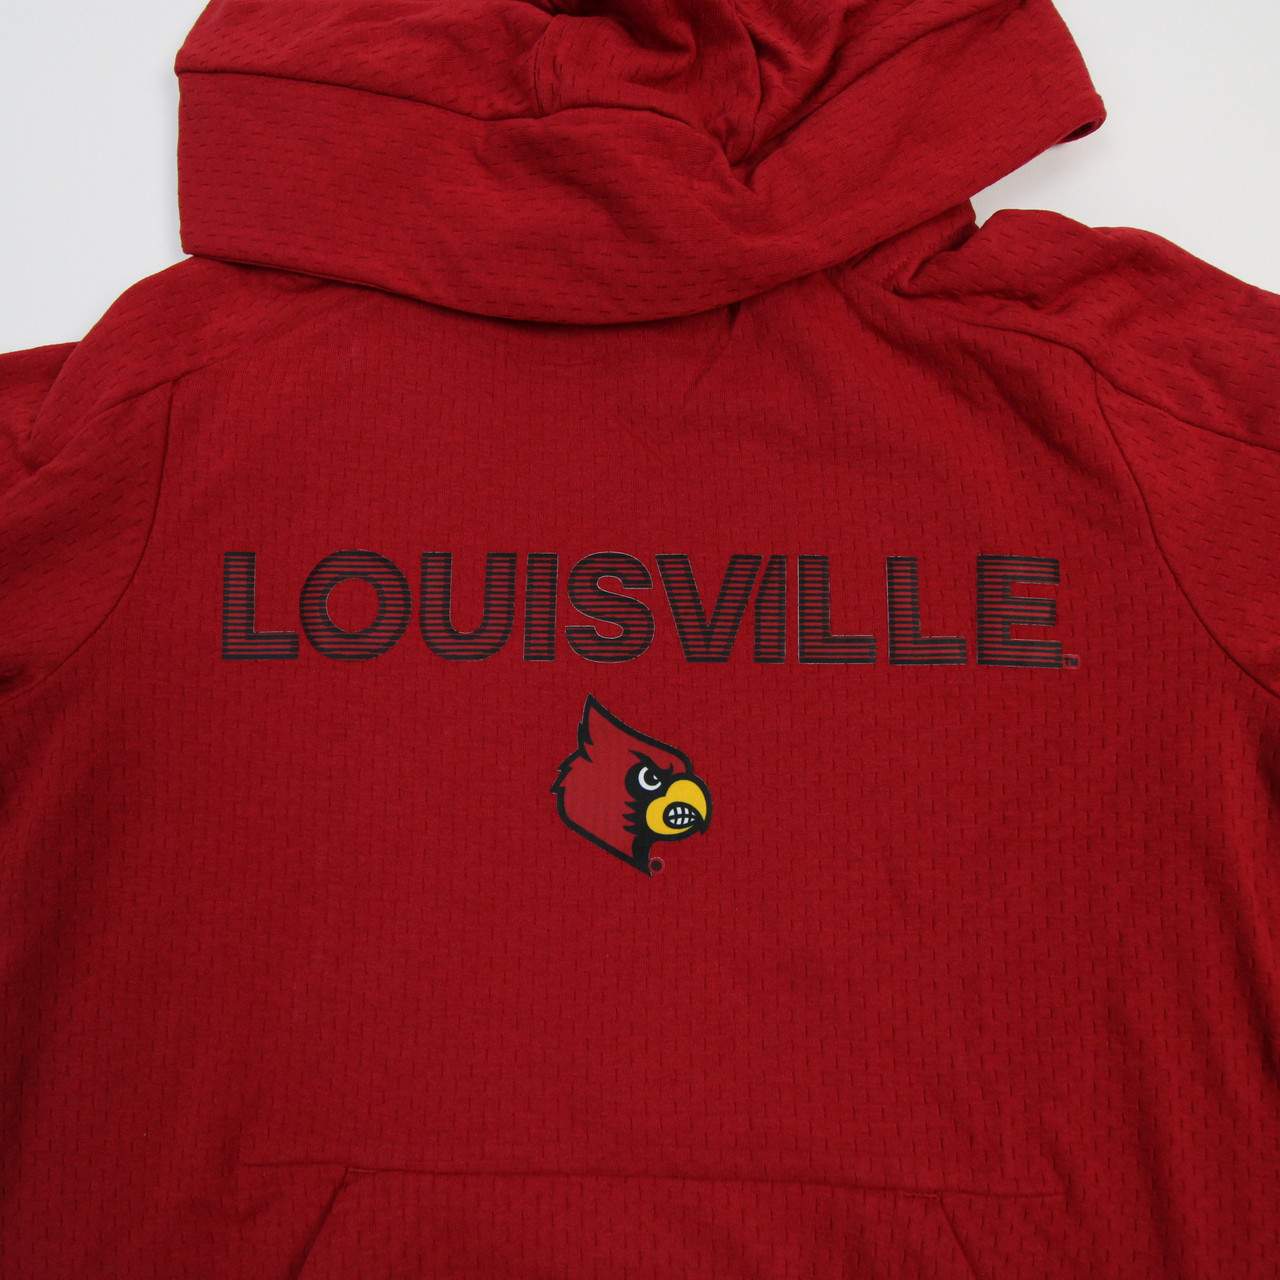 Lids Louisville Cardinals adidas Women's Fashion Pullover Hoodie - Red